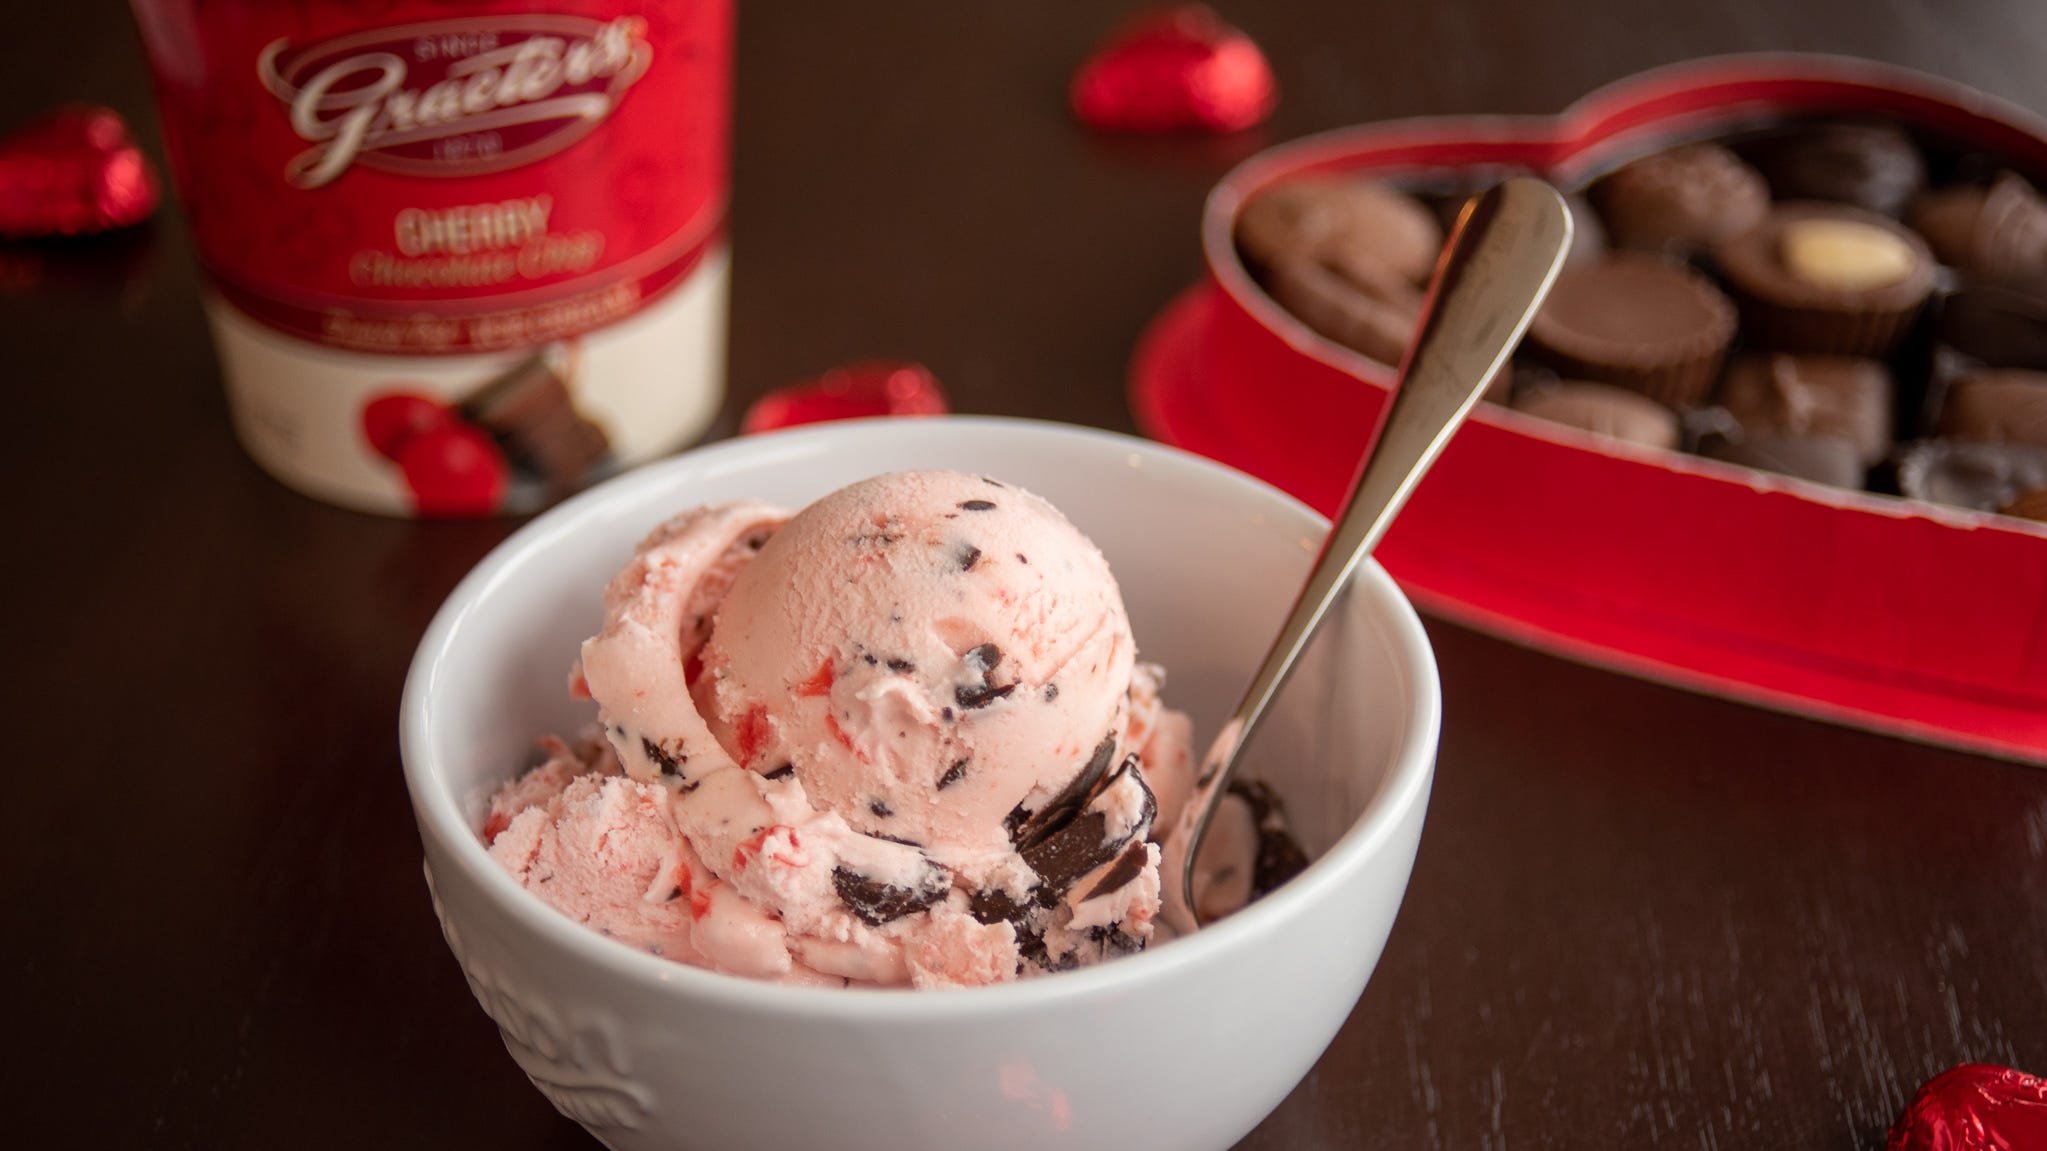 Graeter’s Ice Cream releases seasonal flavor Cherry Chocolate Chip